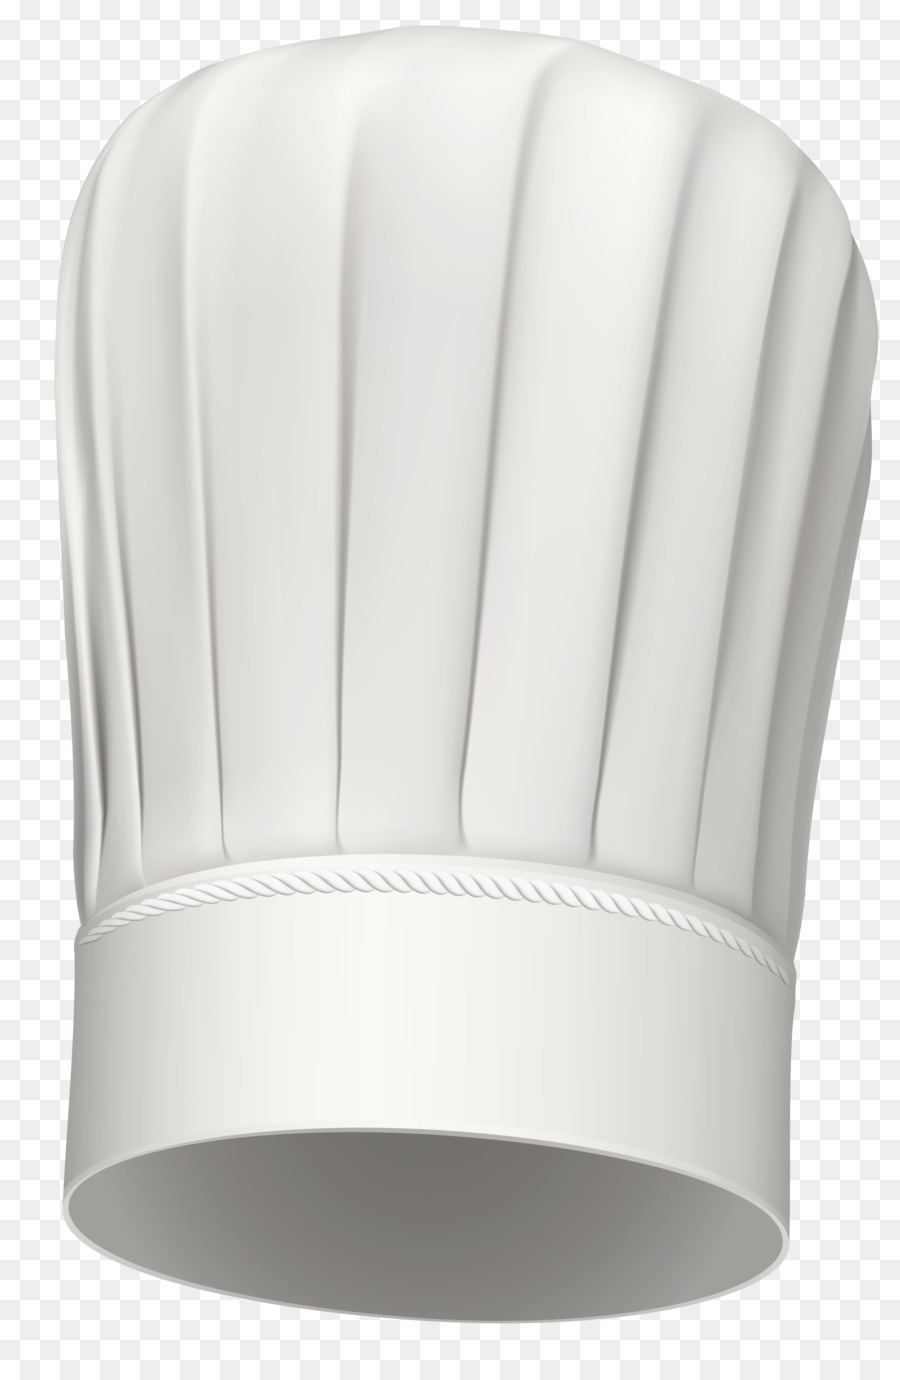 Hat Chefs uniform Cook - Chefs Hat png download - 2164*3300 - Free Transparent Hat png Download.